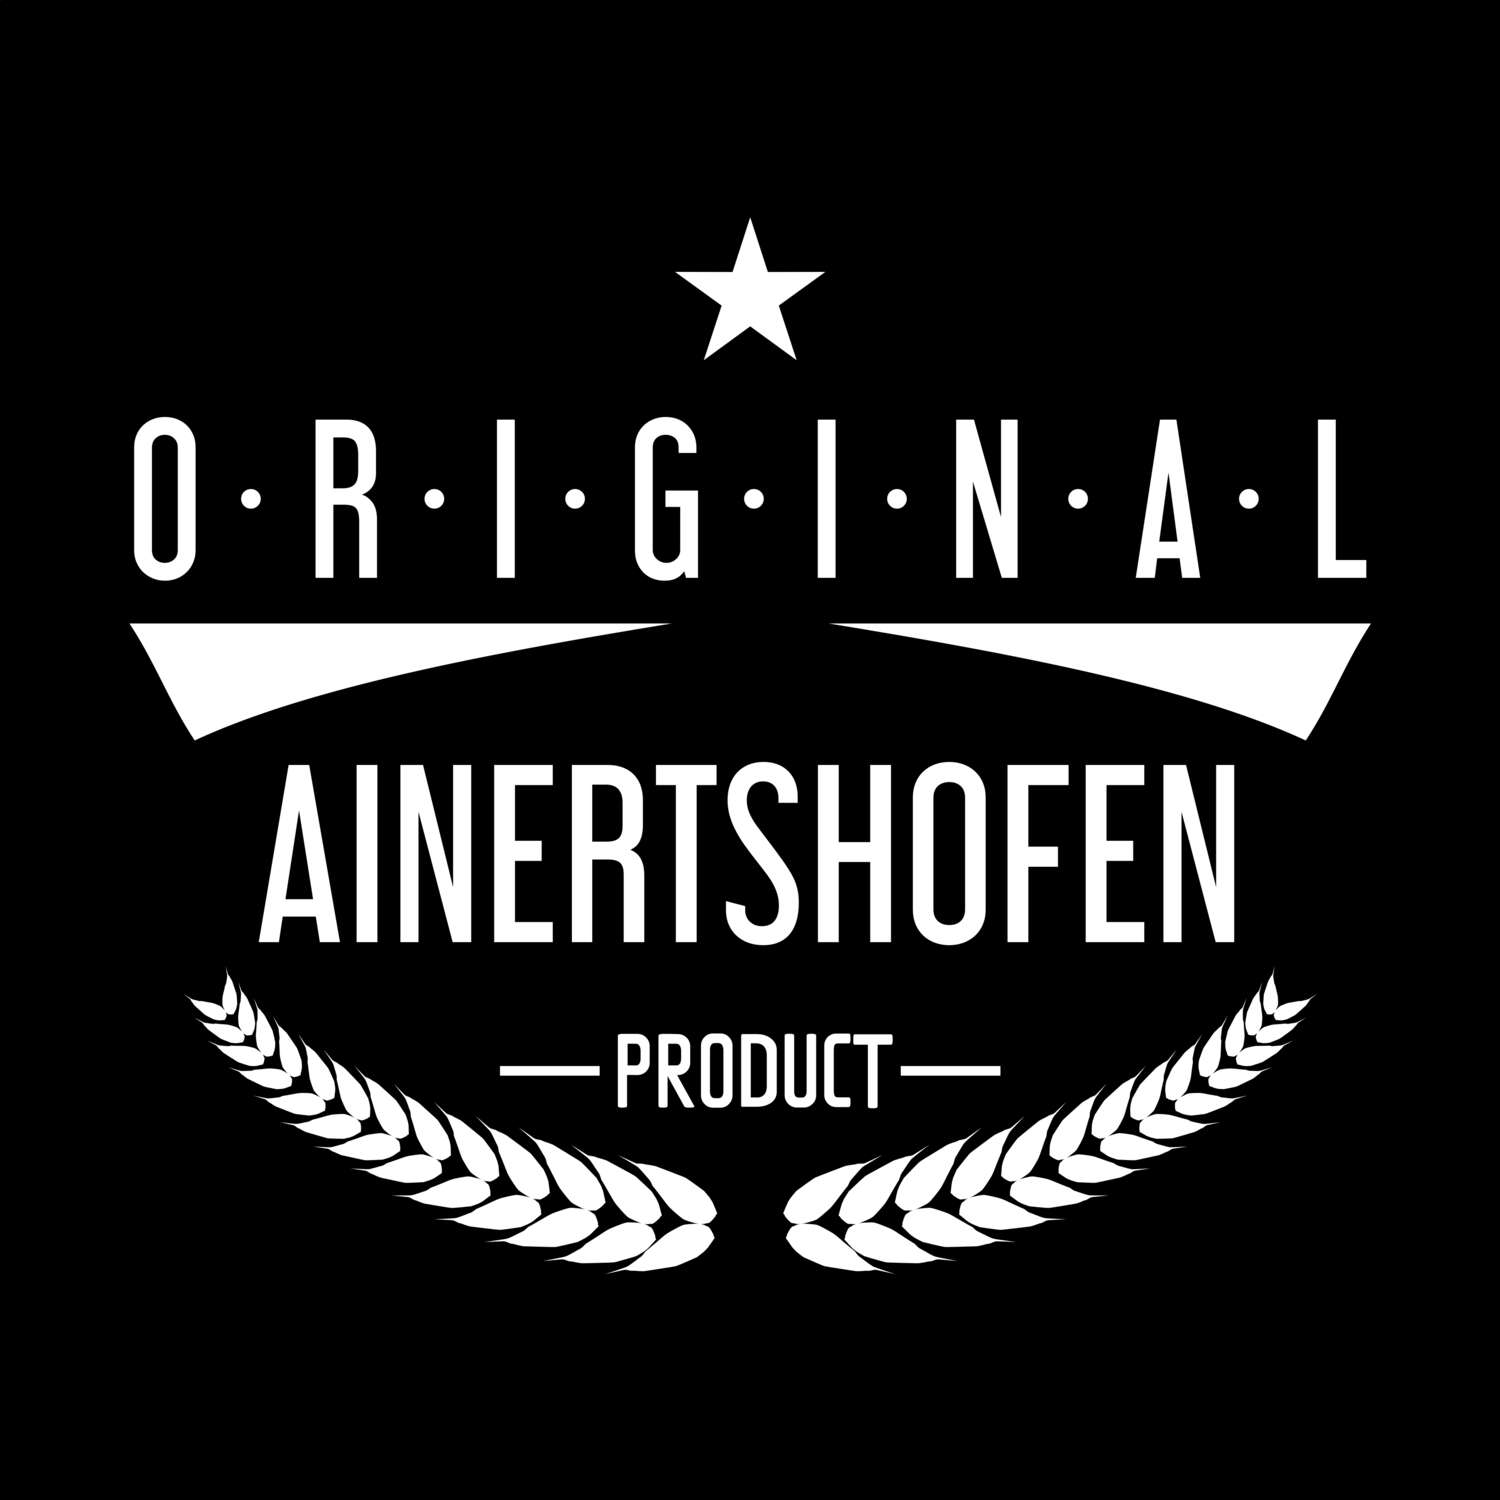 Ainertshofen T-Shirt »Original Product«